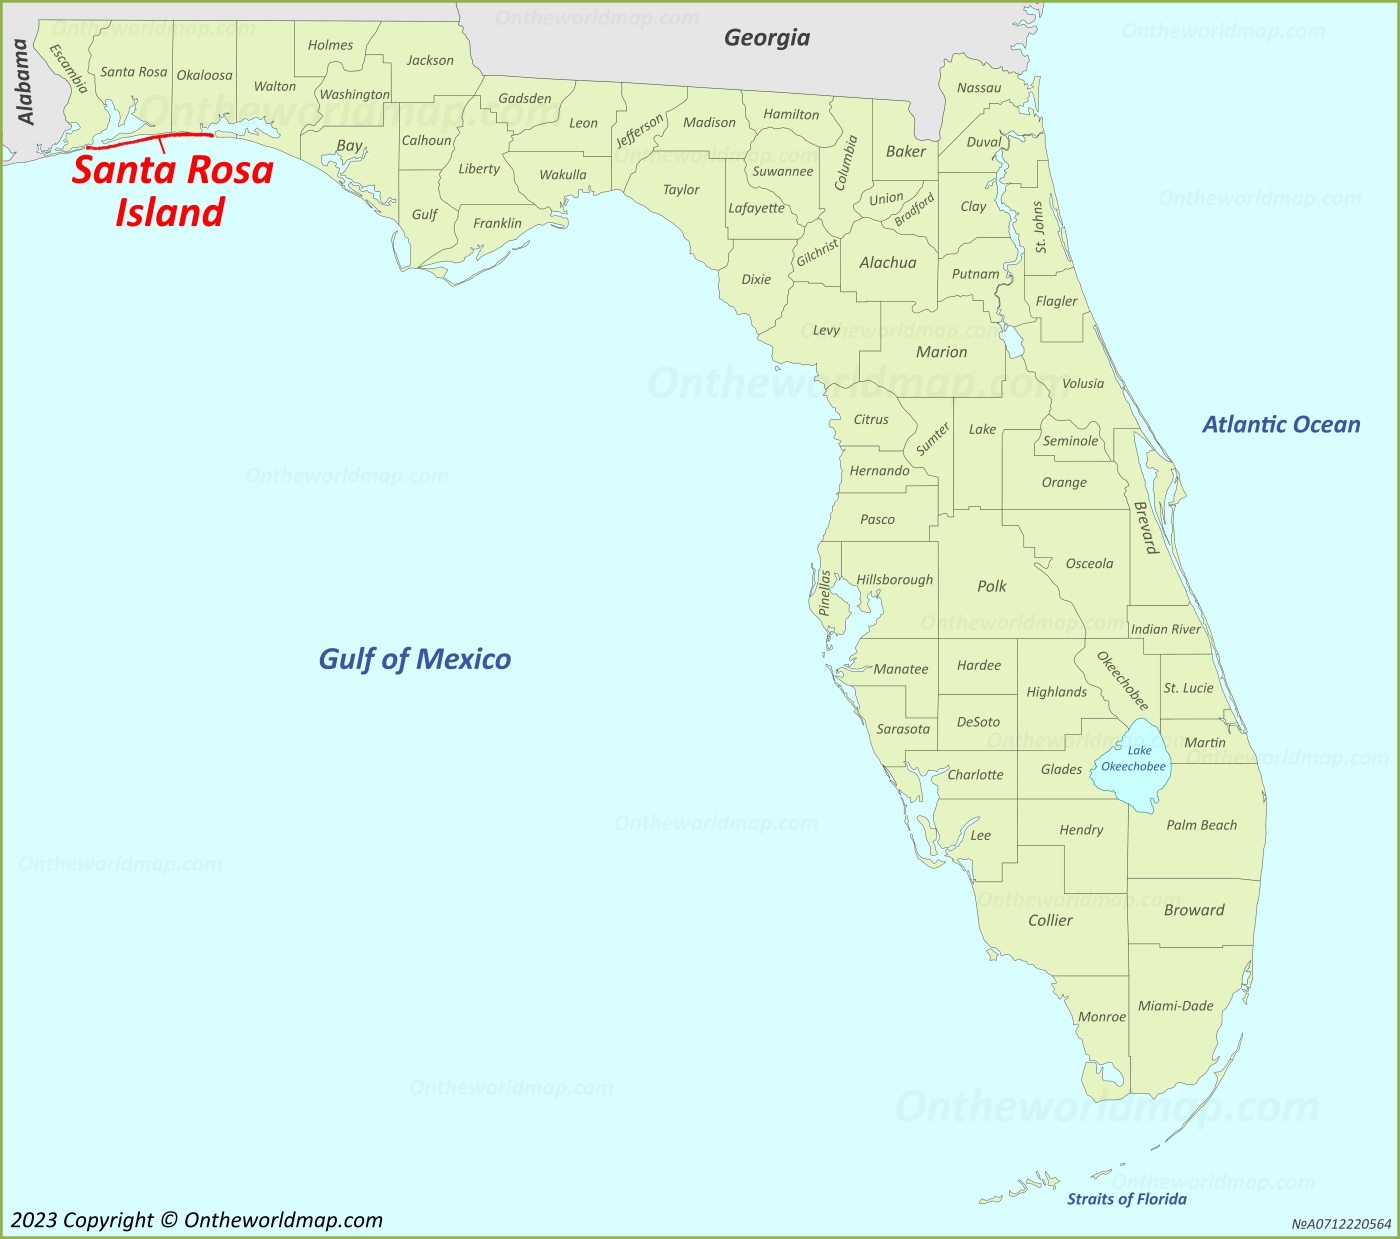 Santa Rosa Island Location On The Florida Map